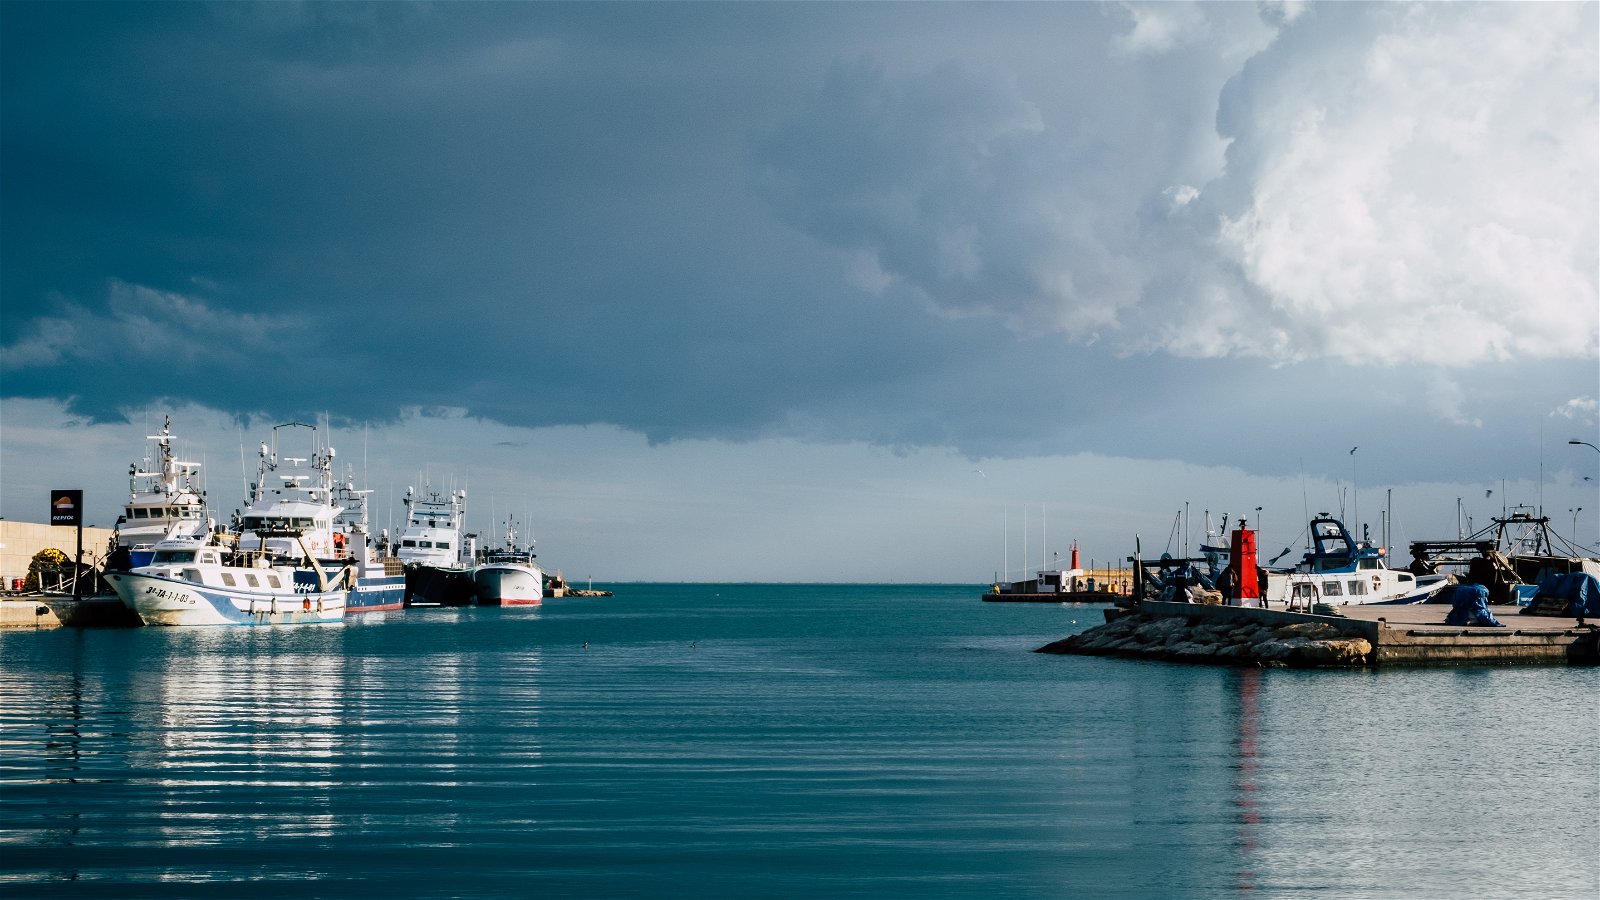 Maritime: LNG as a solution or an anchor?